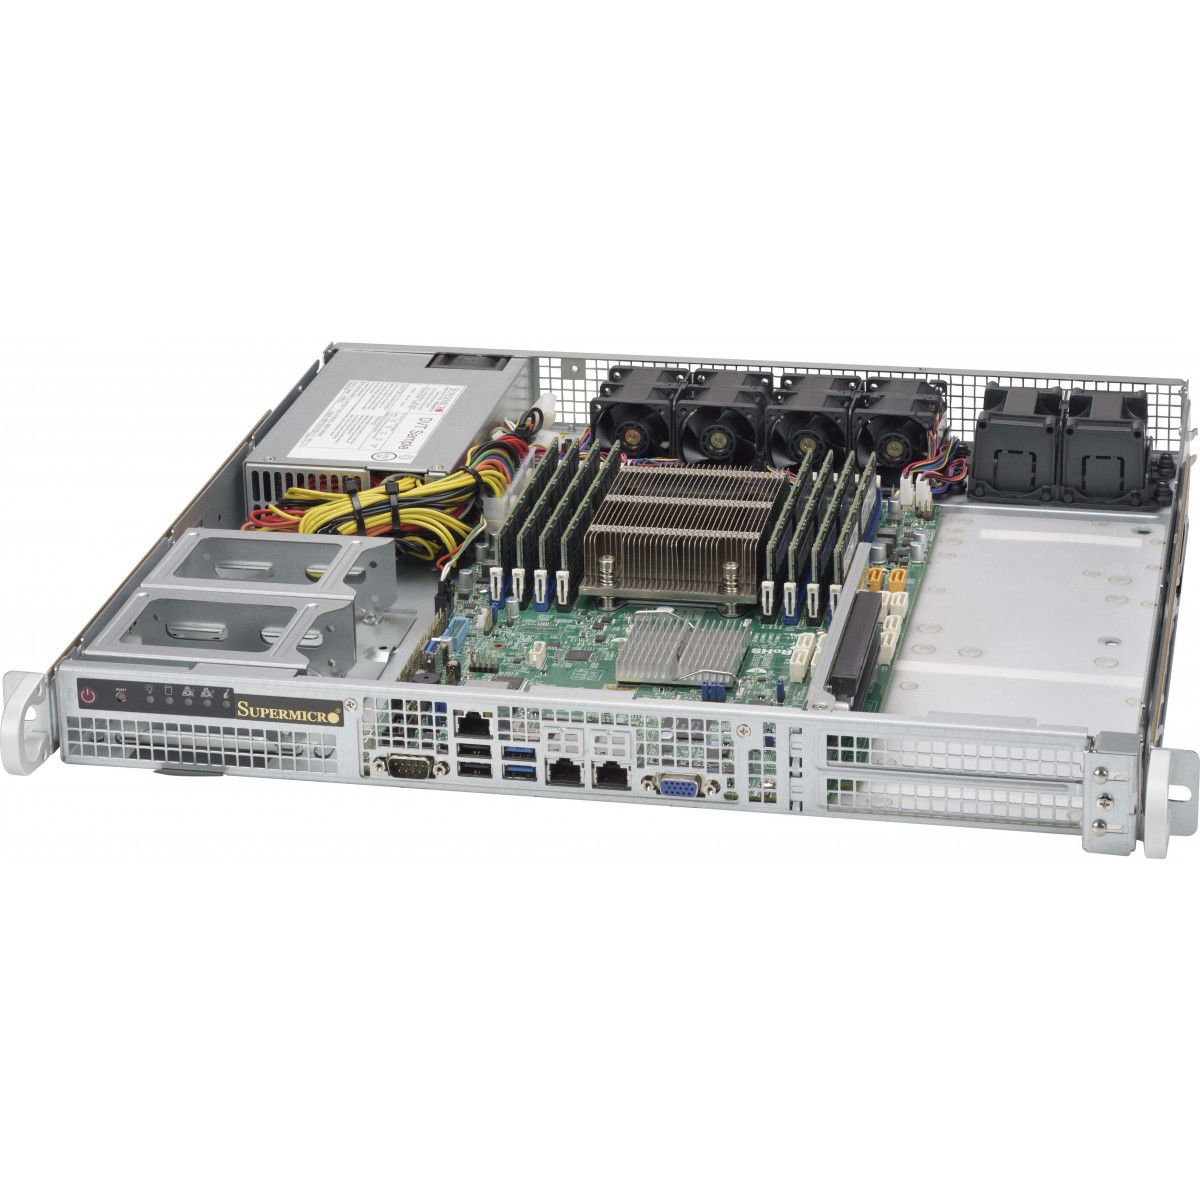 Supermicro CSE-515-350 - Rack - Server - Silver - 1U - Fan fail - HDD - LAN - Power - System - Platinum Level Certified USA - UL